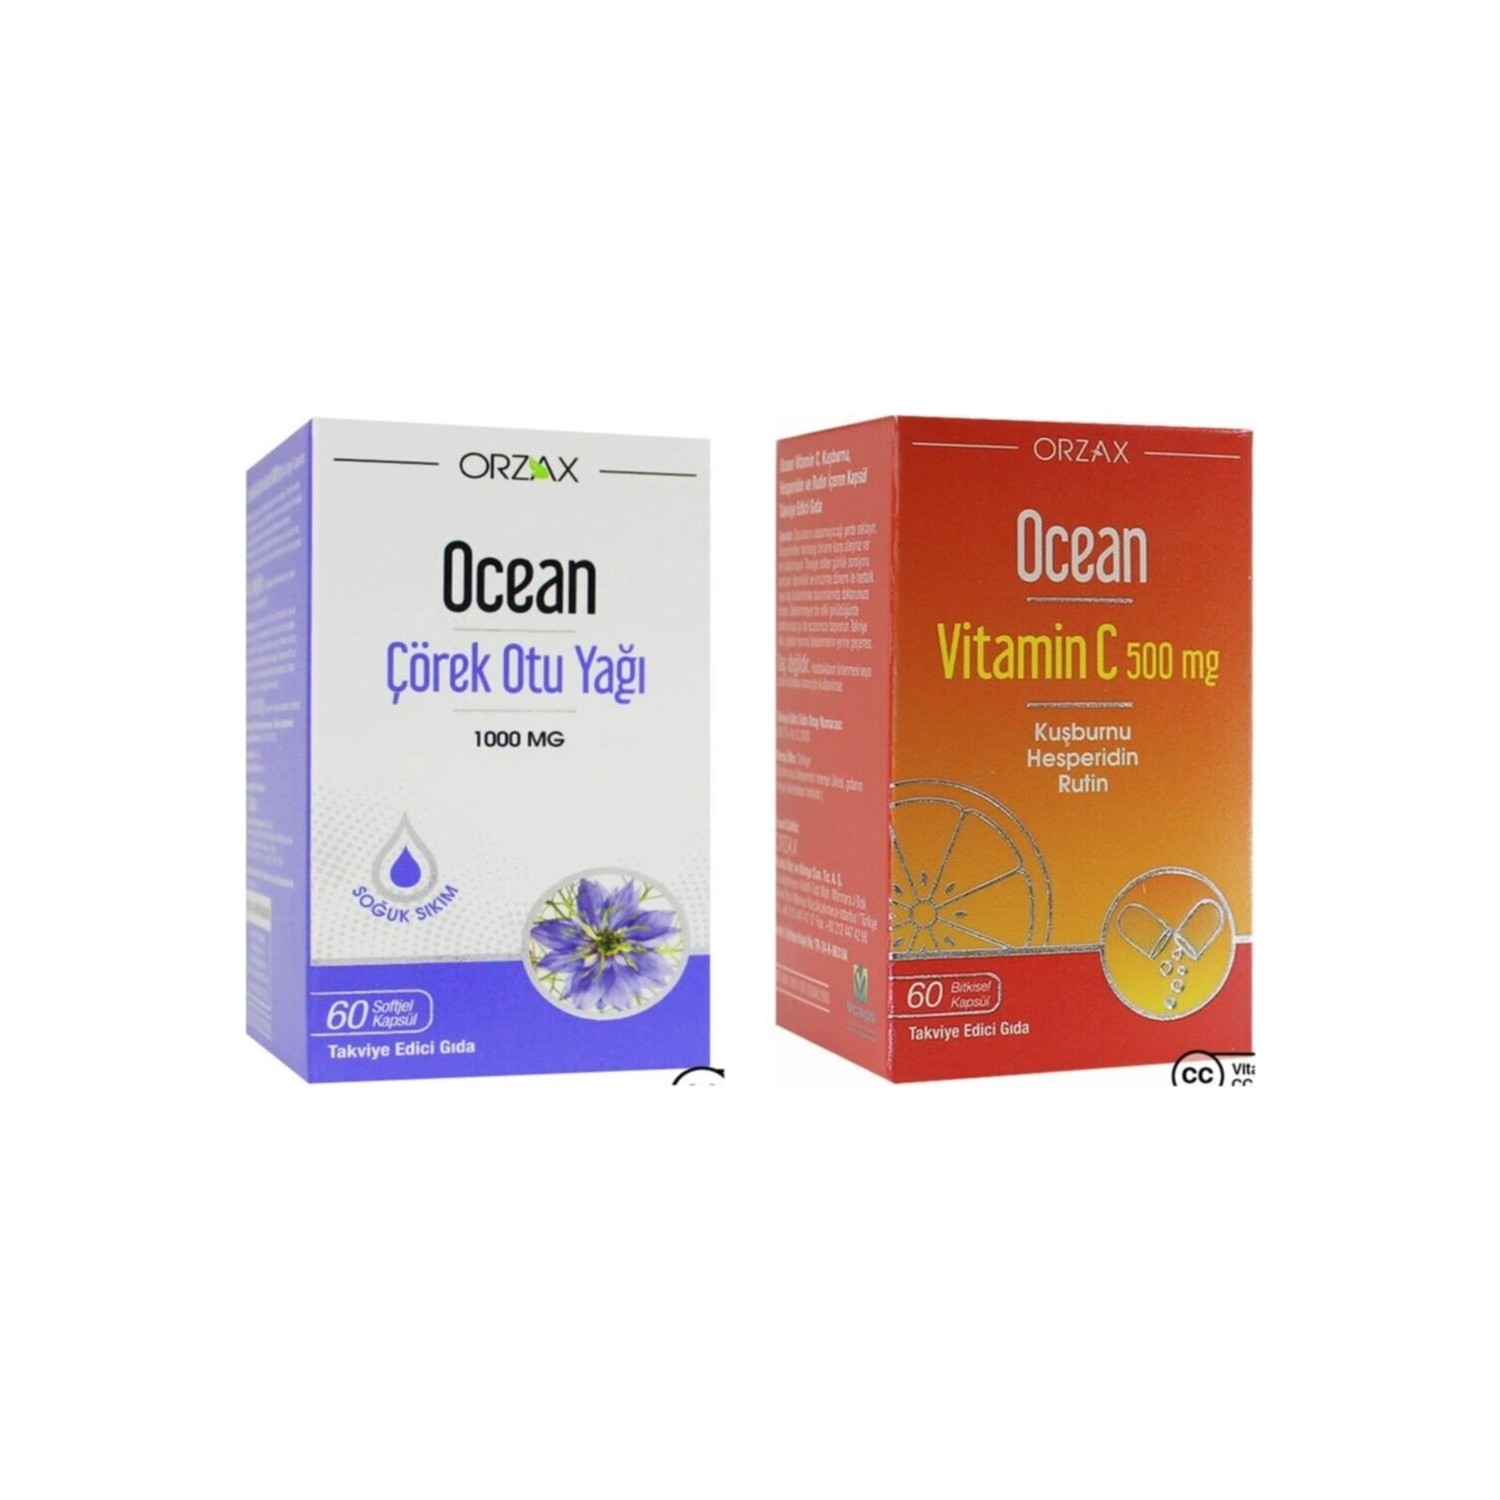 цена Масло черного тмина Ocean, 60 капсул + Витамин C Ocean 500 мг, 60 капсул